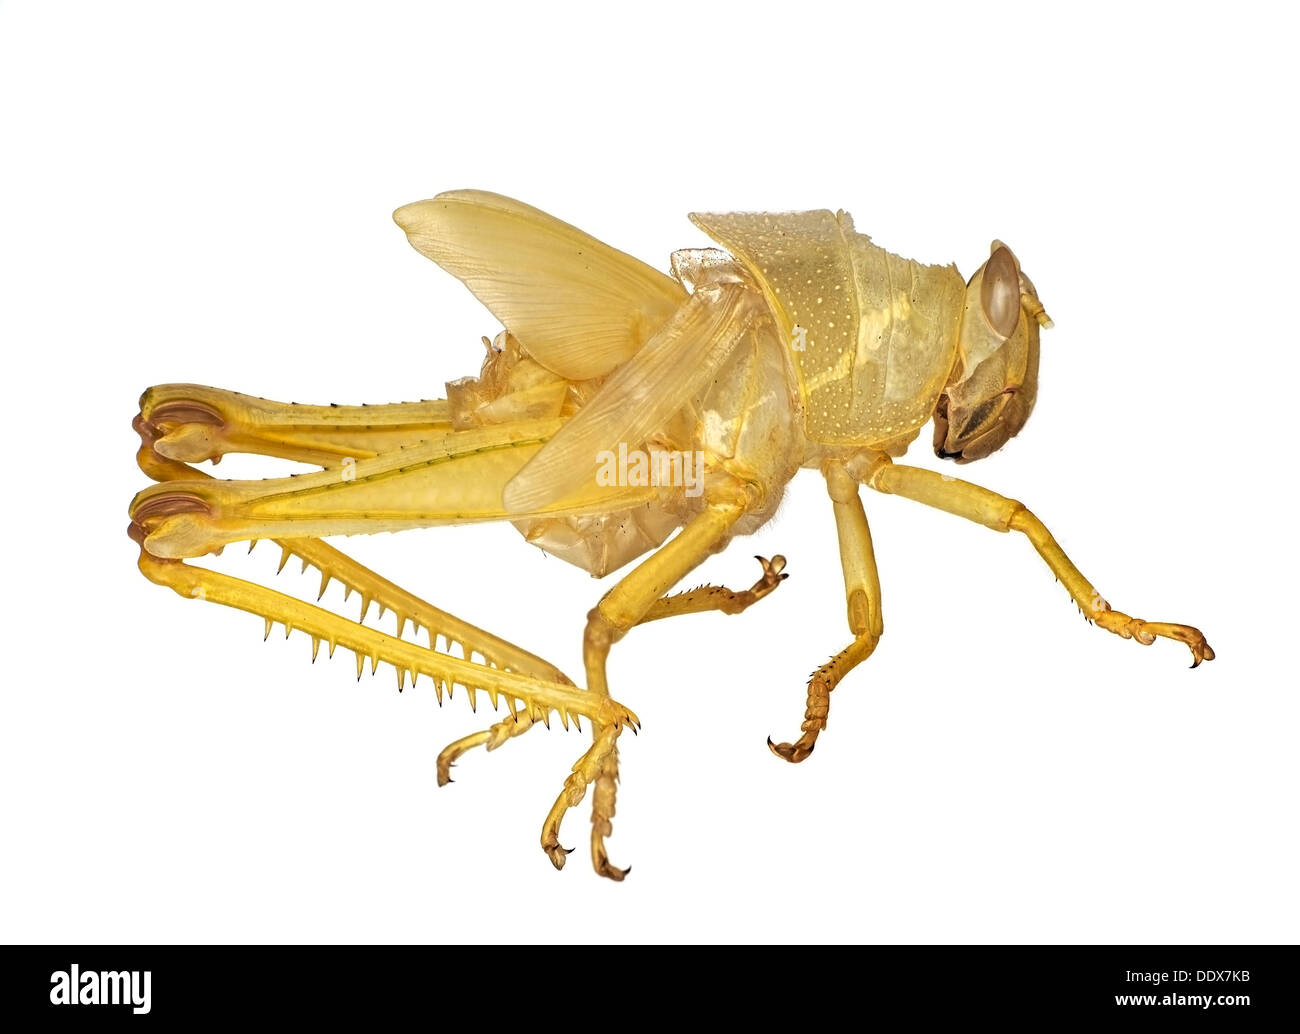 Grasshopper exoskeleton over white Stock Photo